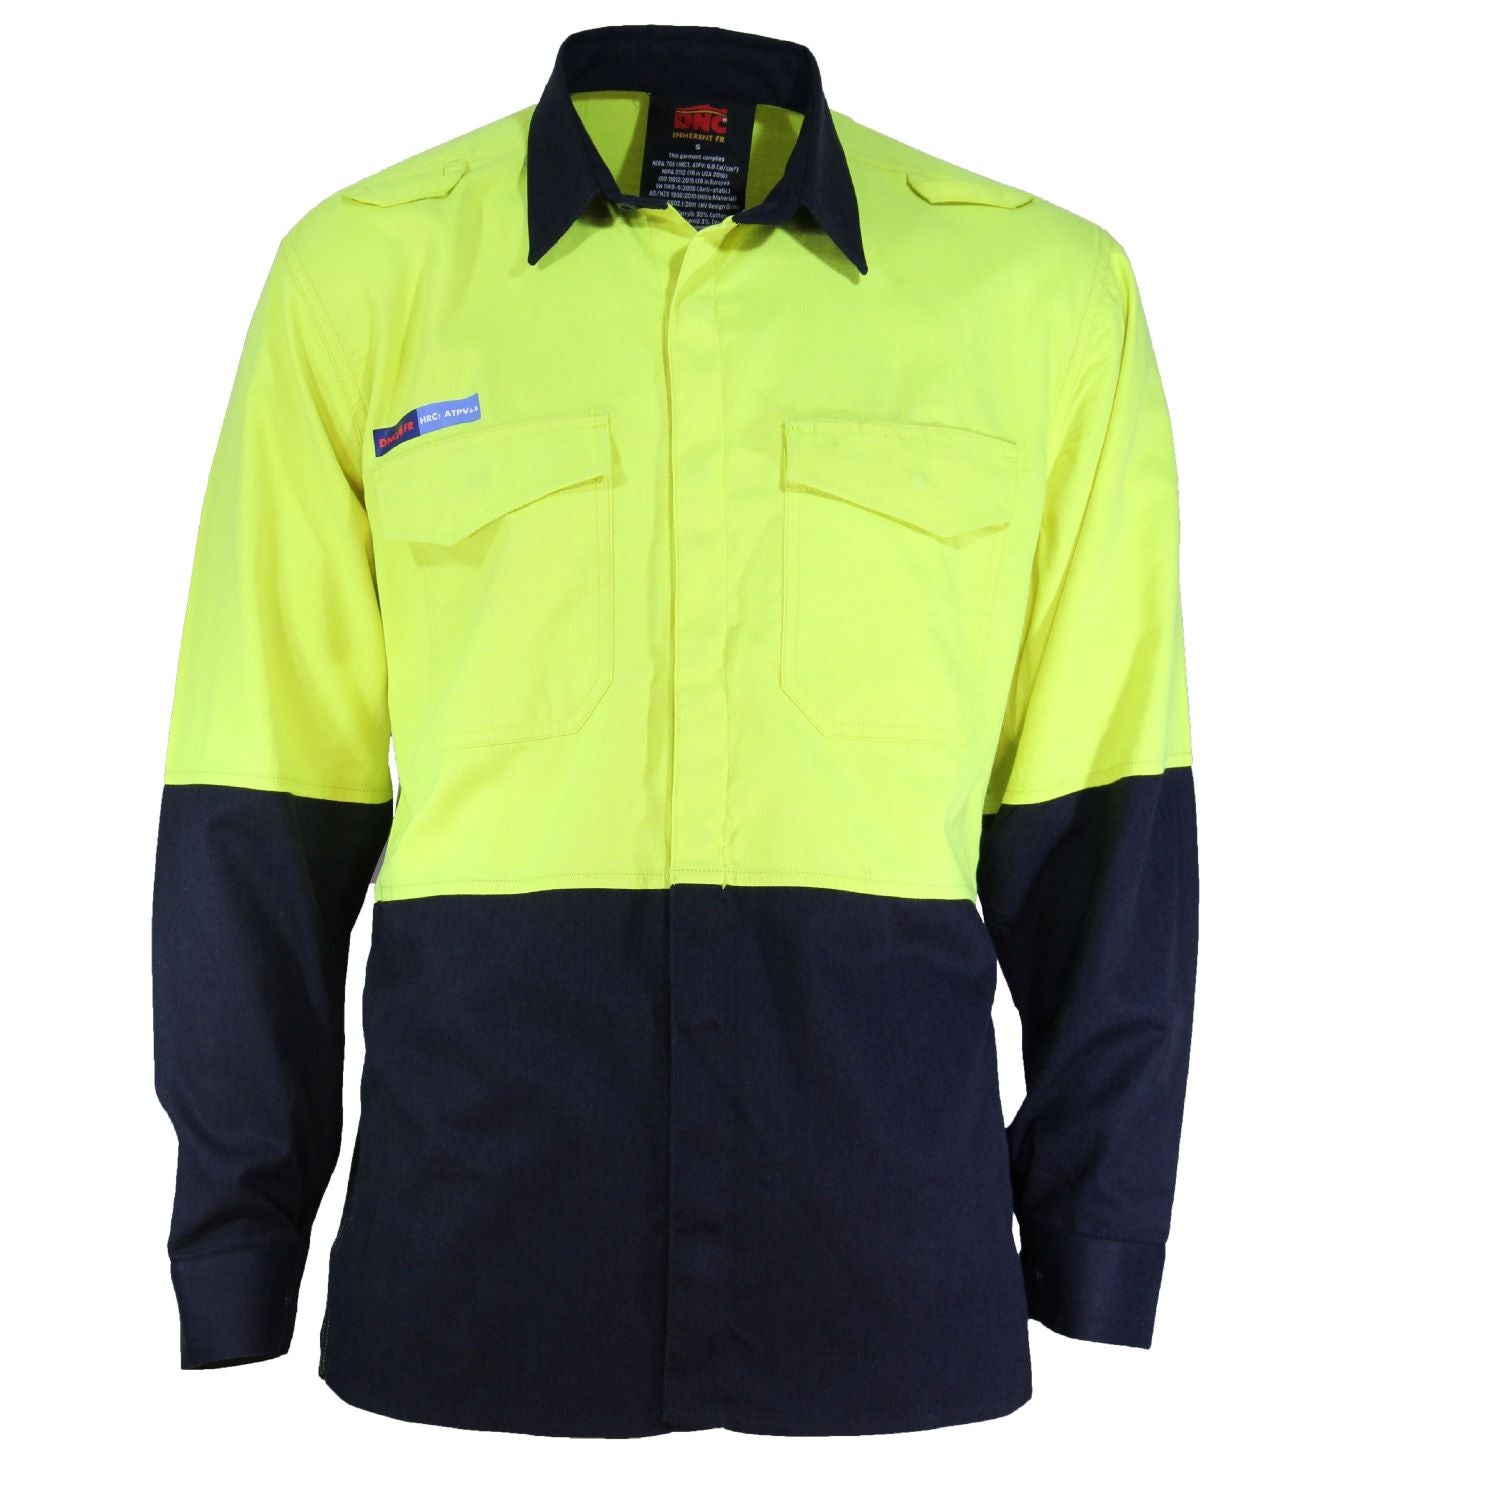 Flamearc Hrc1 2t L/w Fr Shirt - 3441 Work Wear DNC Workwear Yellow/Navy XS 